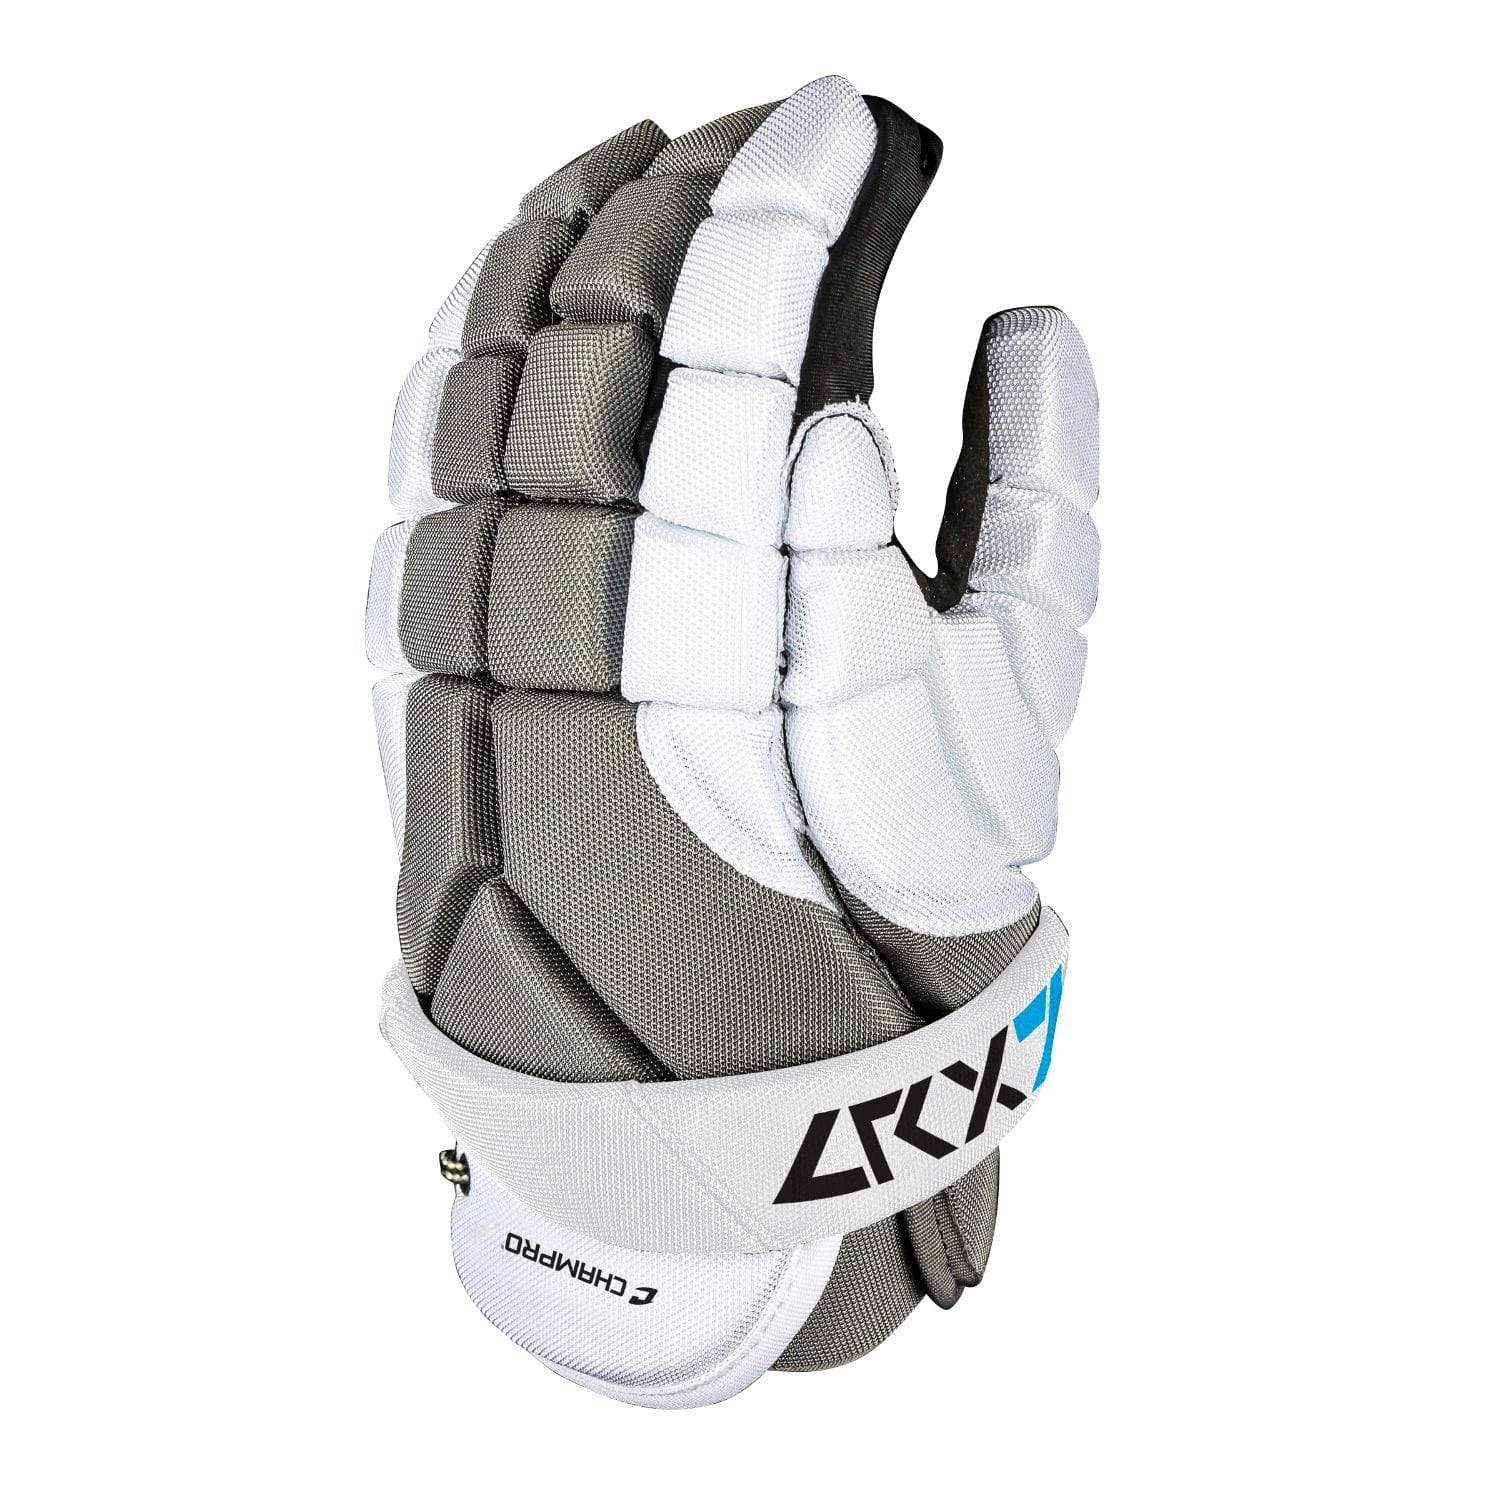 Champro Sports : Lacrosse Champro LRX7 8 in Lacrosse Glove Grey White Small